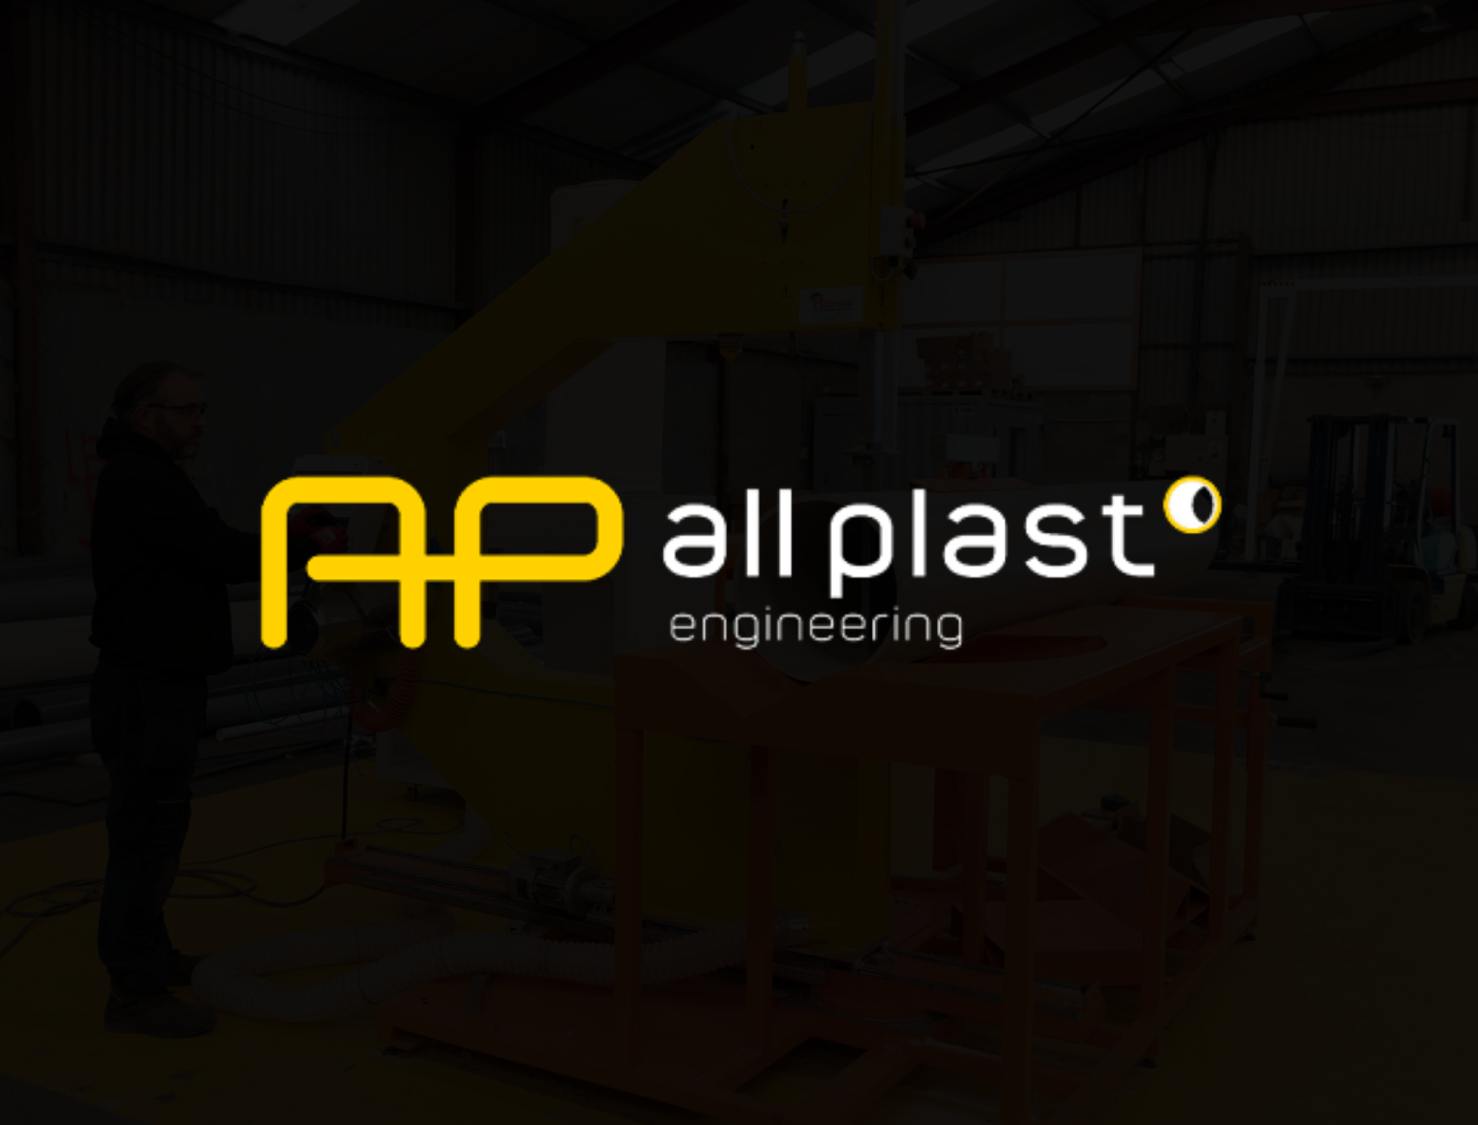 All-Plast-Engineering-creative-project-ireland